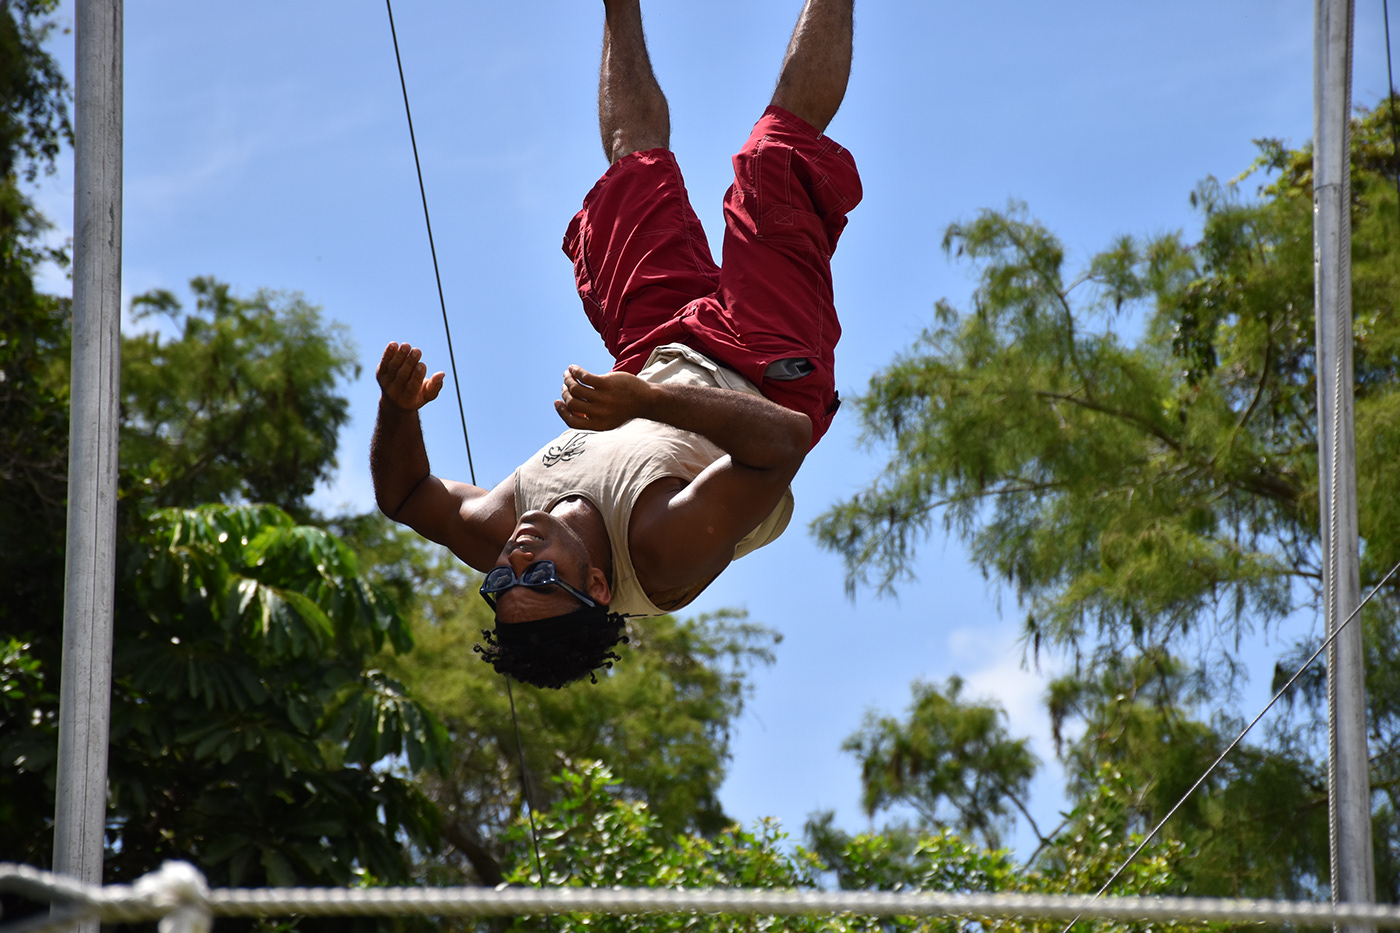 Flying photographer Photography  photoshoot portfolio portrait social media stun trapeze